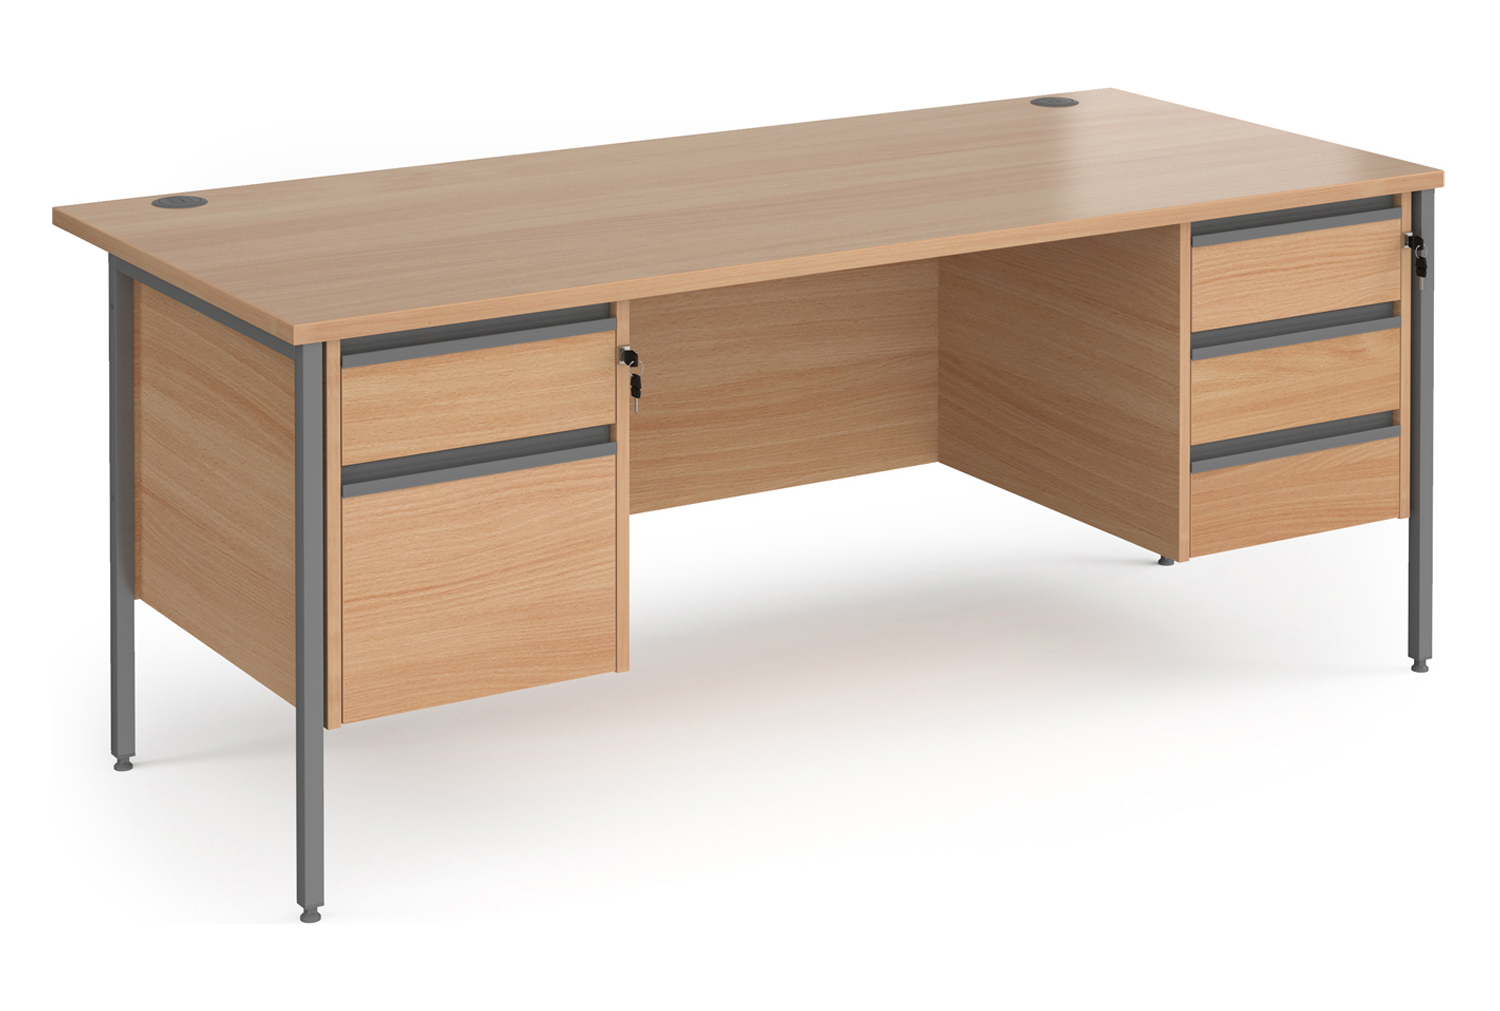 Value Line Classic+ Rectangular H-Leg Office Desk 2+3 Drawers (Graphite Leg), 180wx80dx73h (cm), Beech, Express Delivery